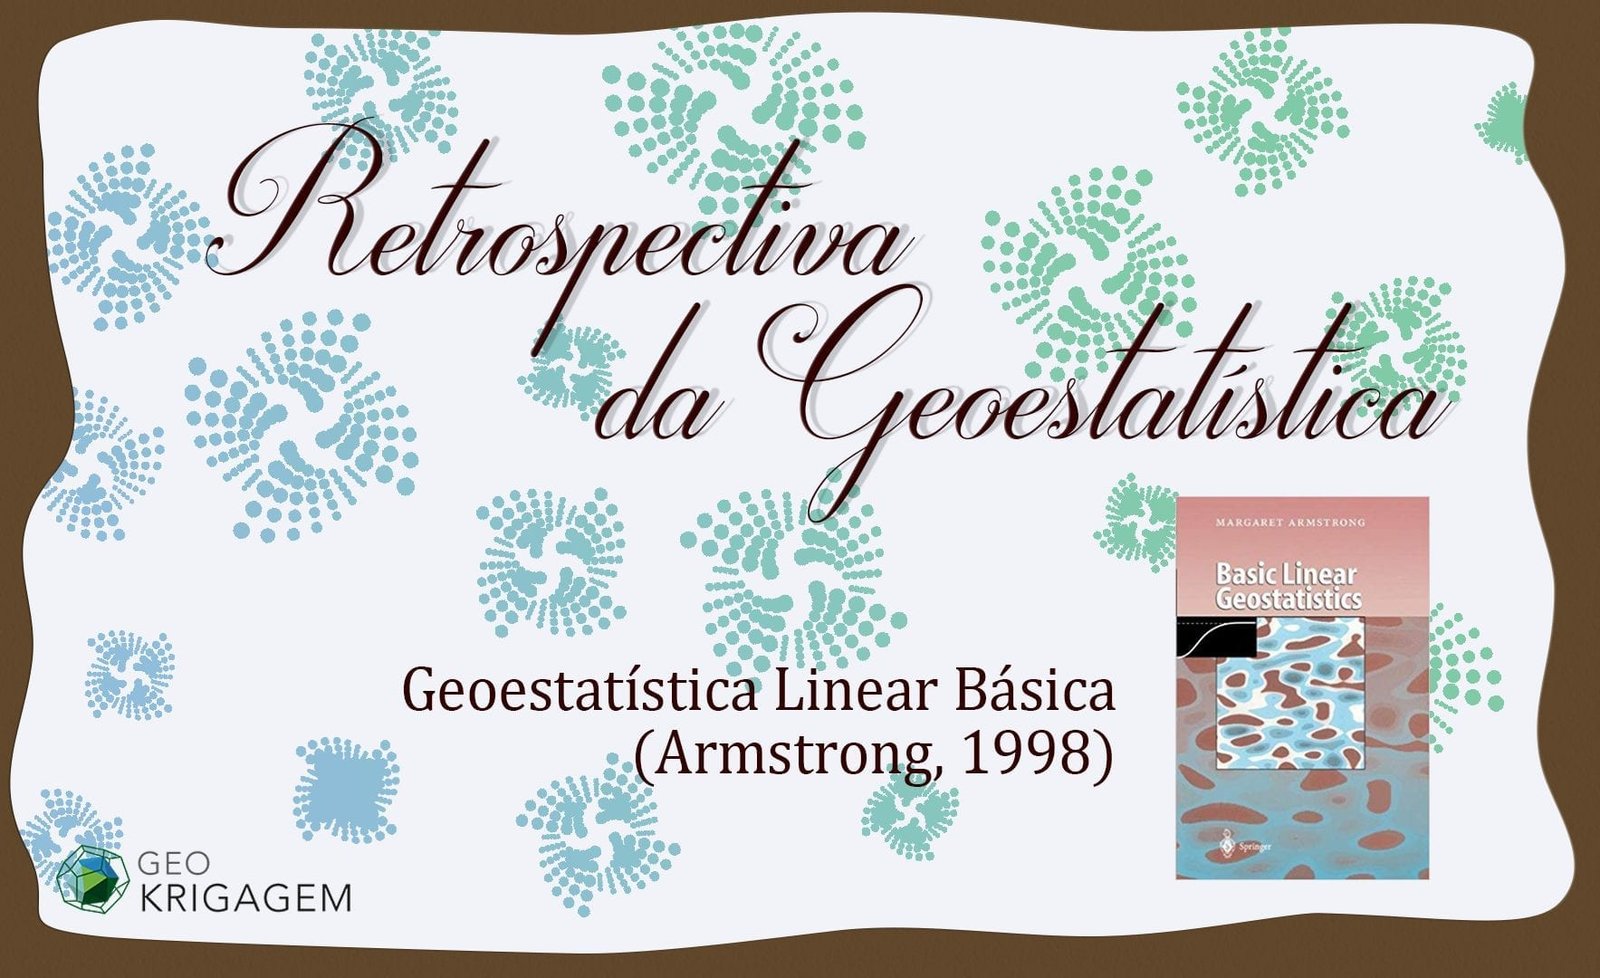 Basic Linear Geostatistics - Geoestatística linear básica - Margaret Armstrong, 1998